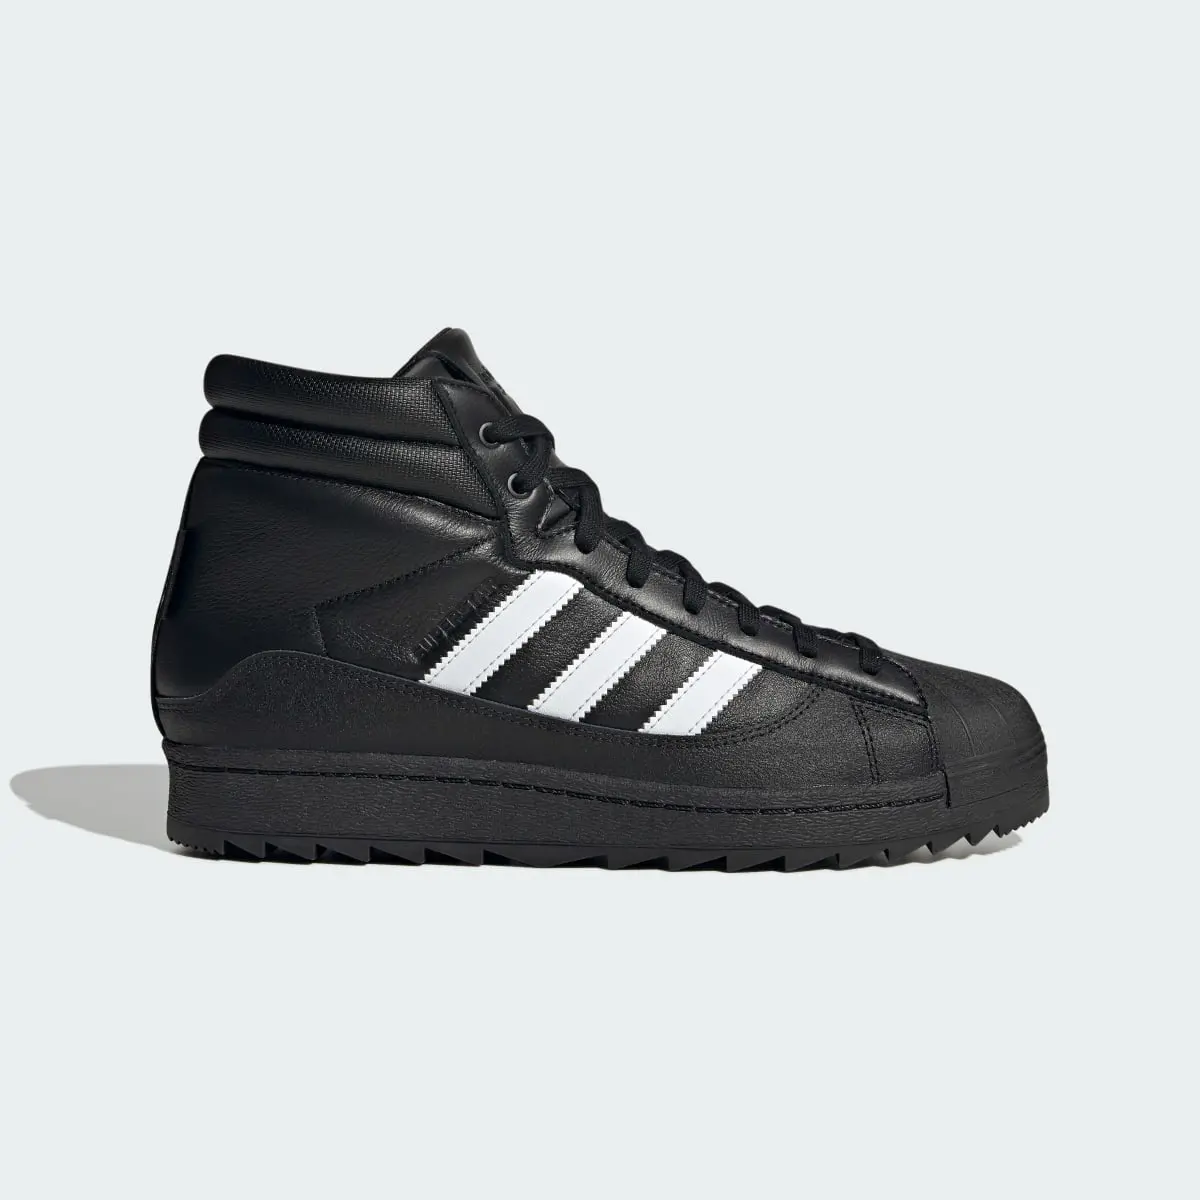 Adidas Superstar GORE-TEX Winter Boots. 2